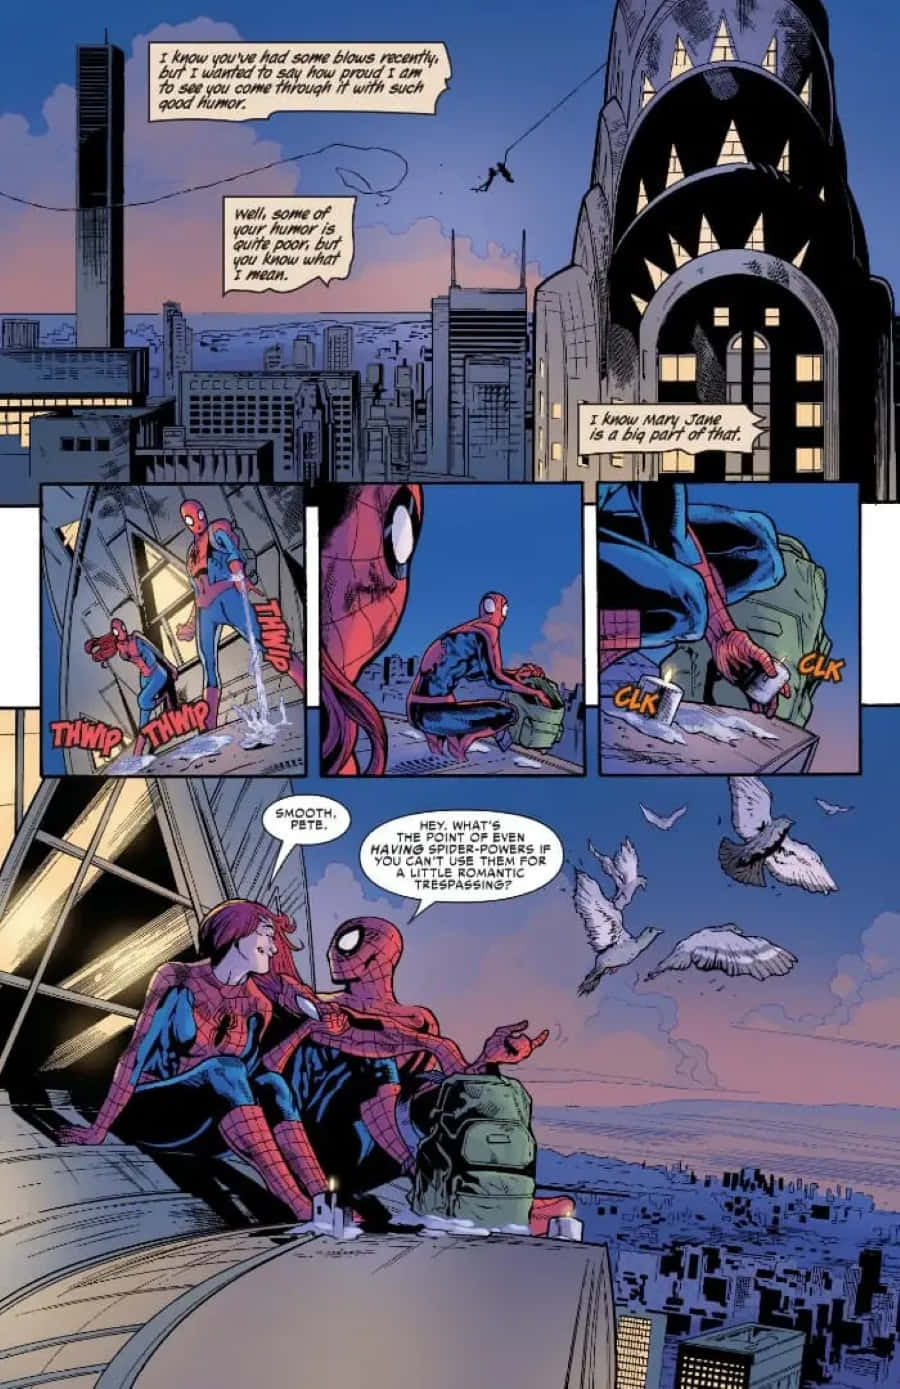 Friendly Neighborhood Spider-Man swinging into action Wallpaper